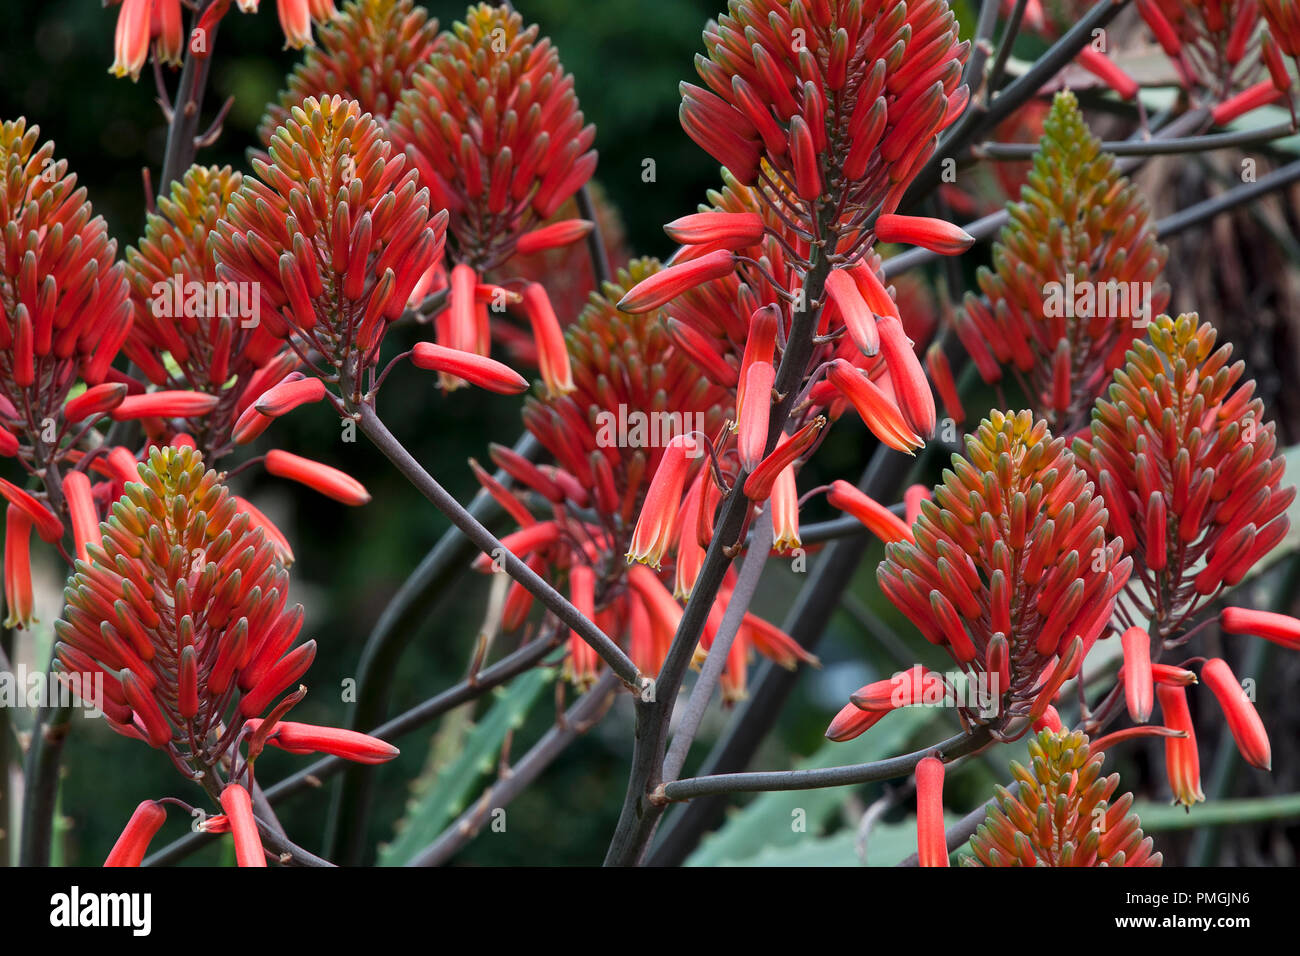 Sydney Australia, flower heads of an aloe cryptopoda plant Stock Photo